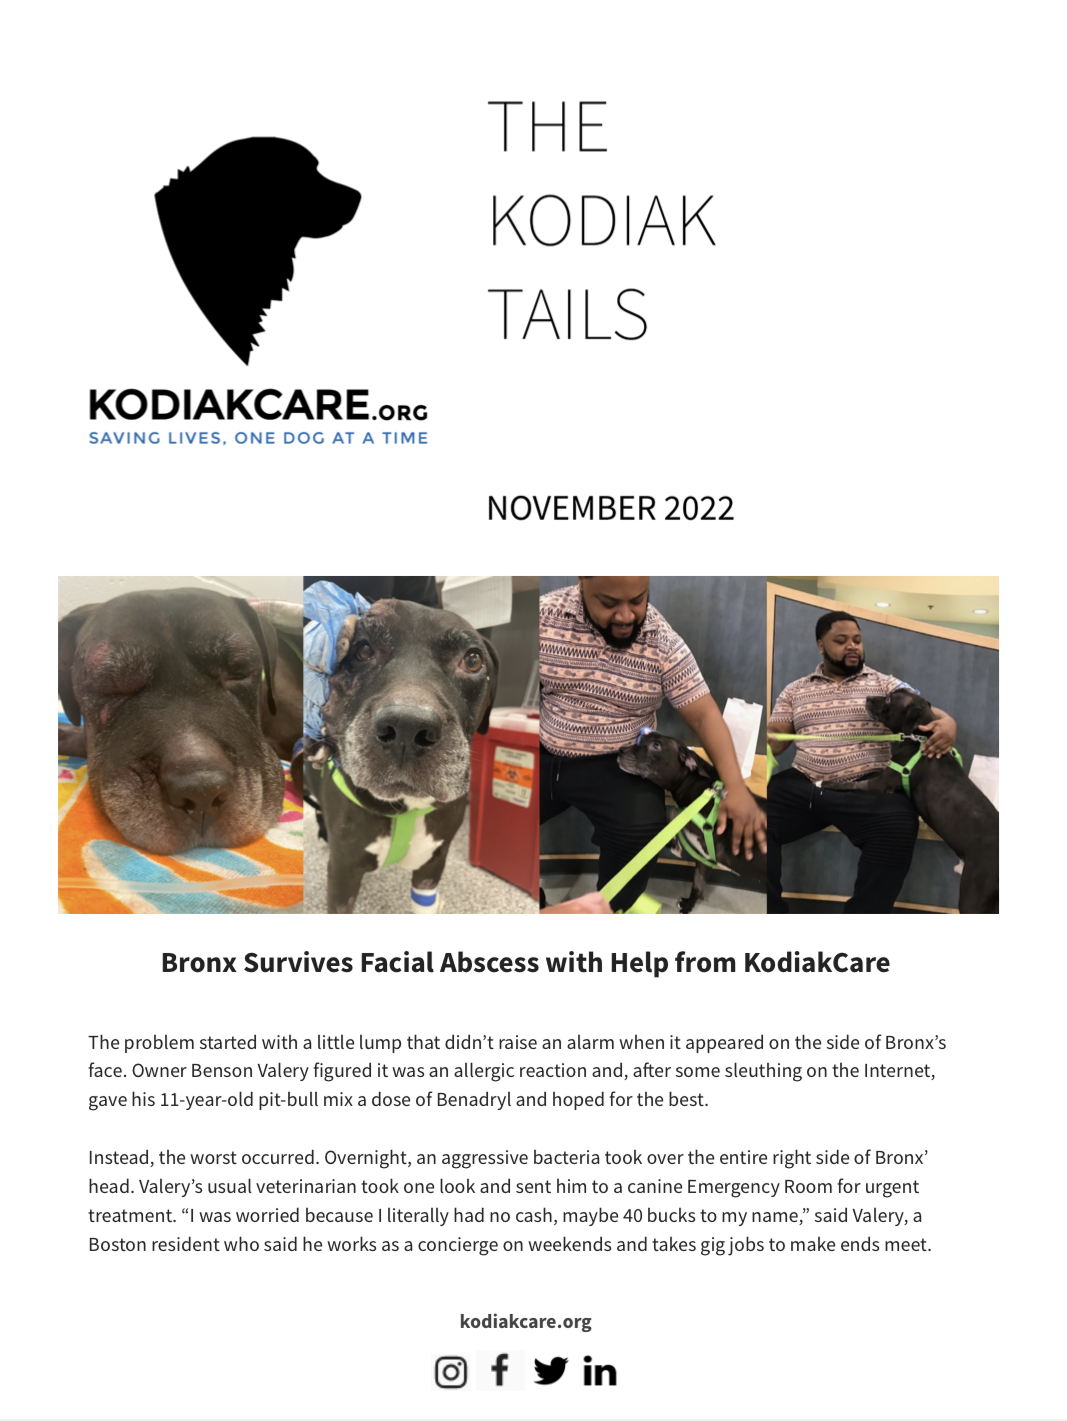 Bronx Survives Facial Abscess with Help from KodiakCare: The Kodiak Tails 11.2022